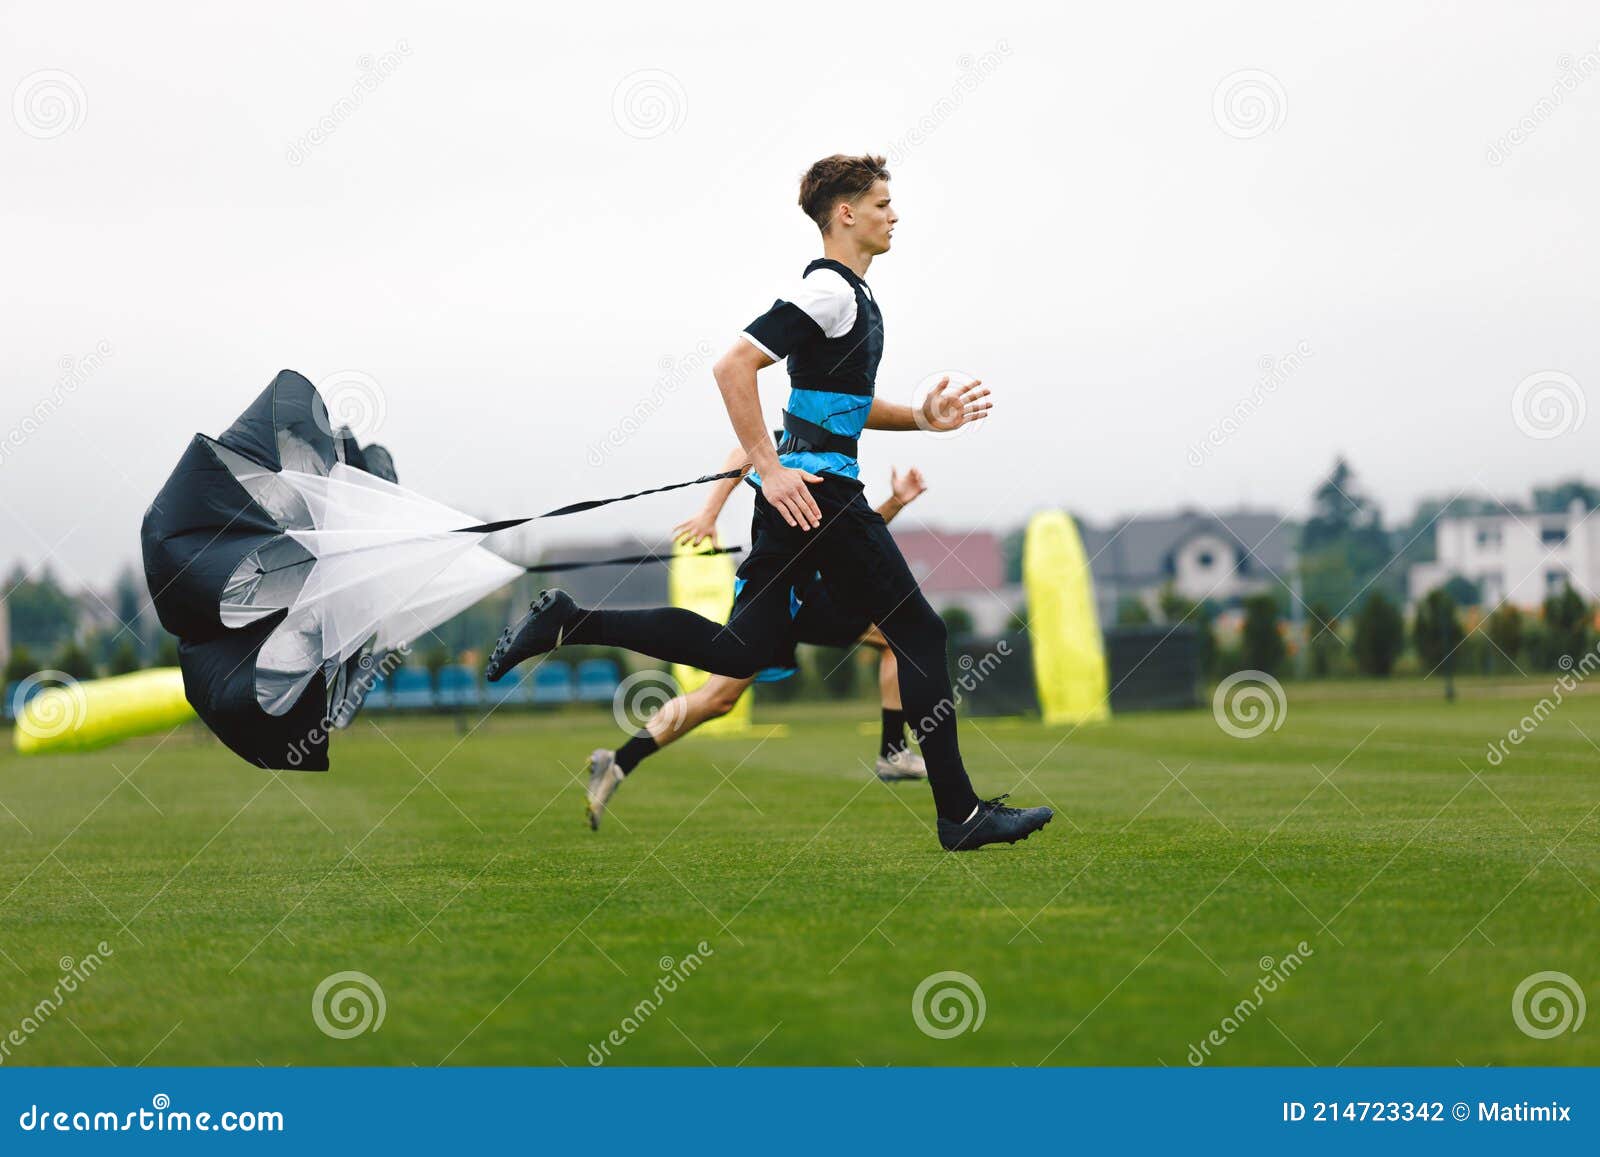 Junior Football Player Running with Parachute. Soccer Endurance